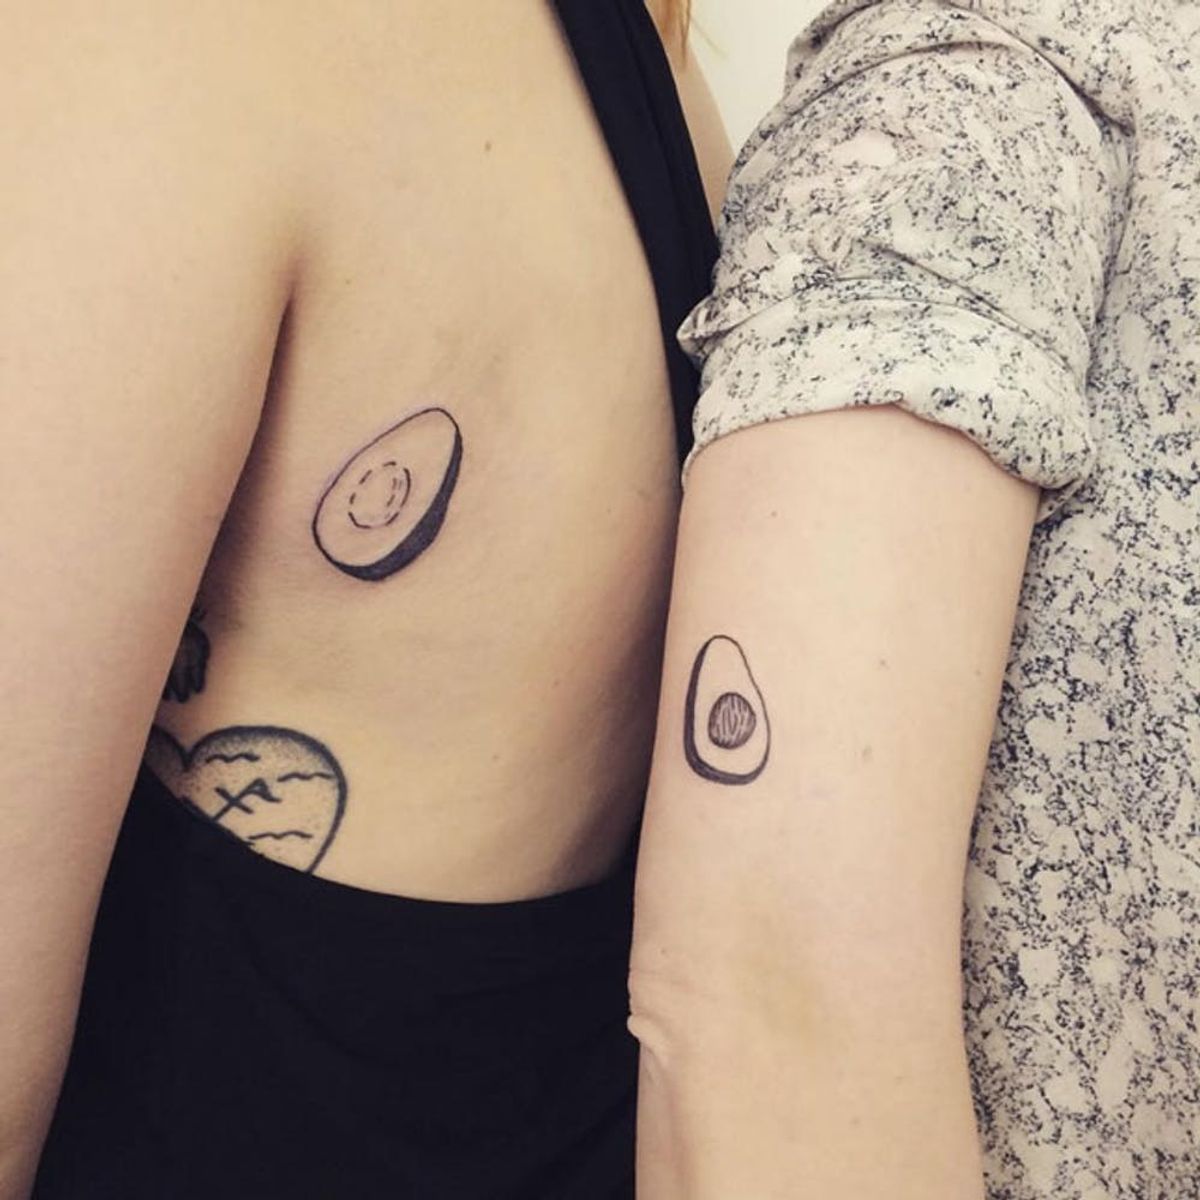 13 Snack Tattoos Better Than Miley’s Vegemite Ink